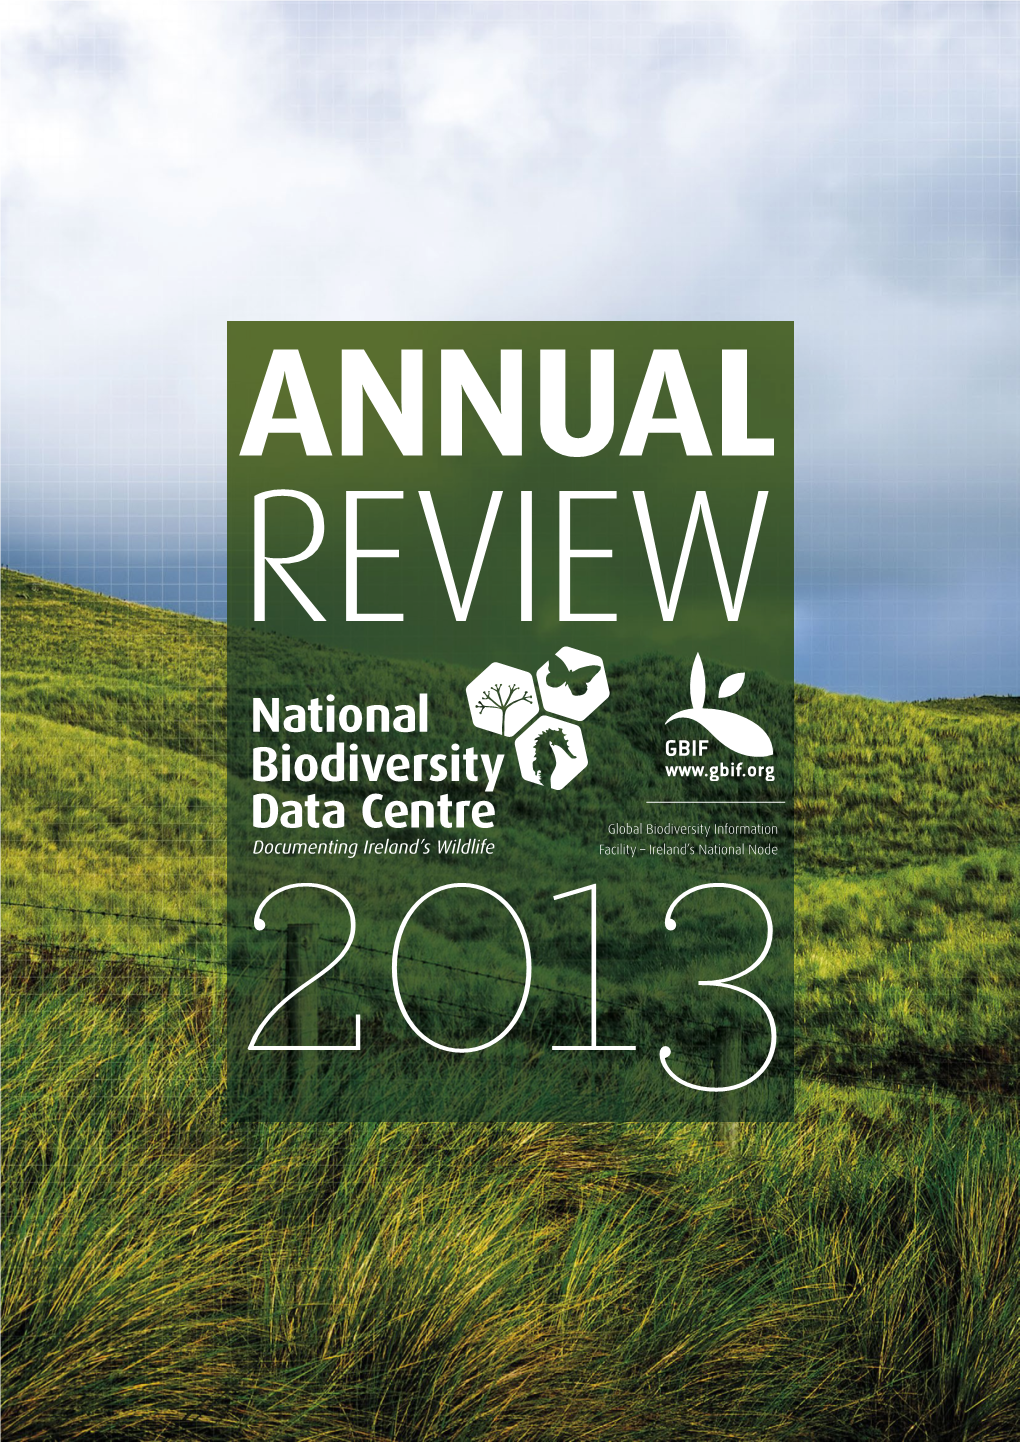 Global Biodiversity Information Facility – Ireland's National Node